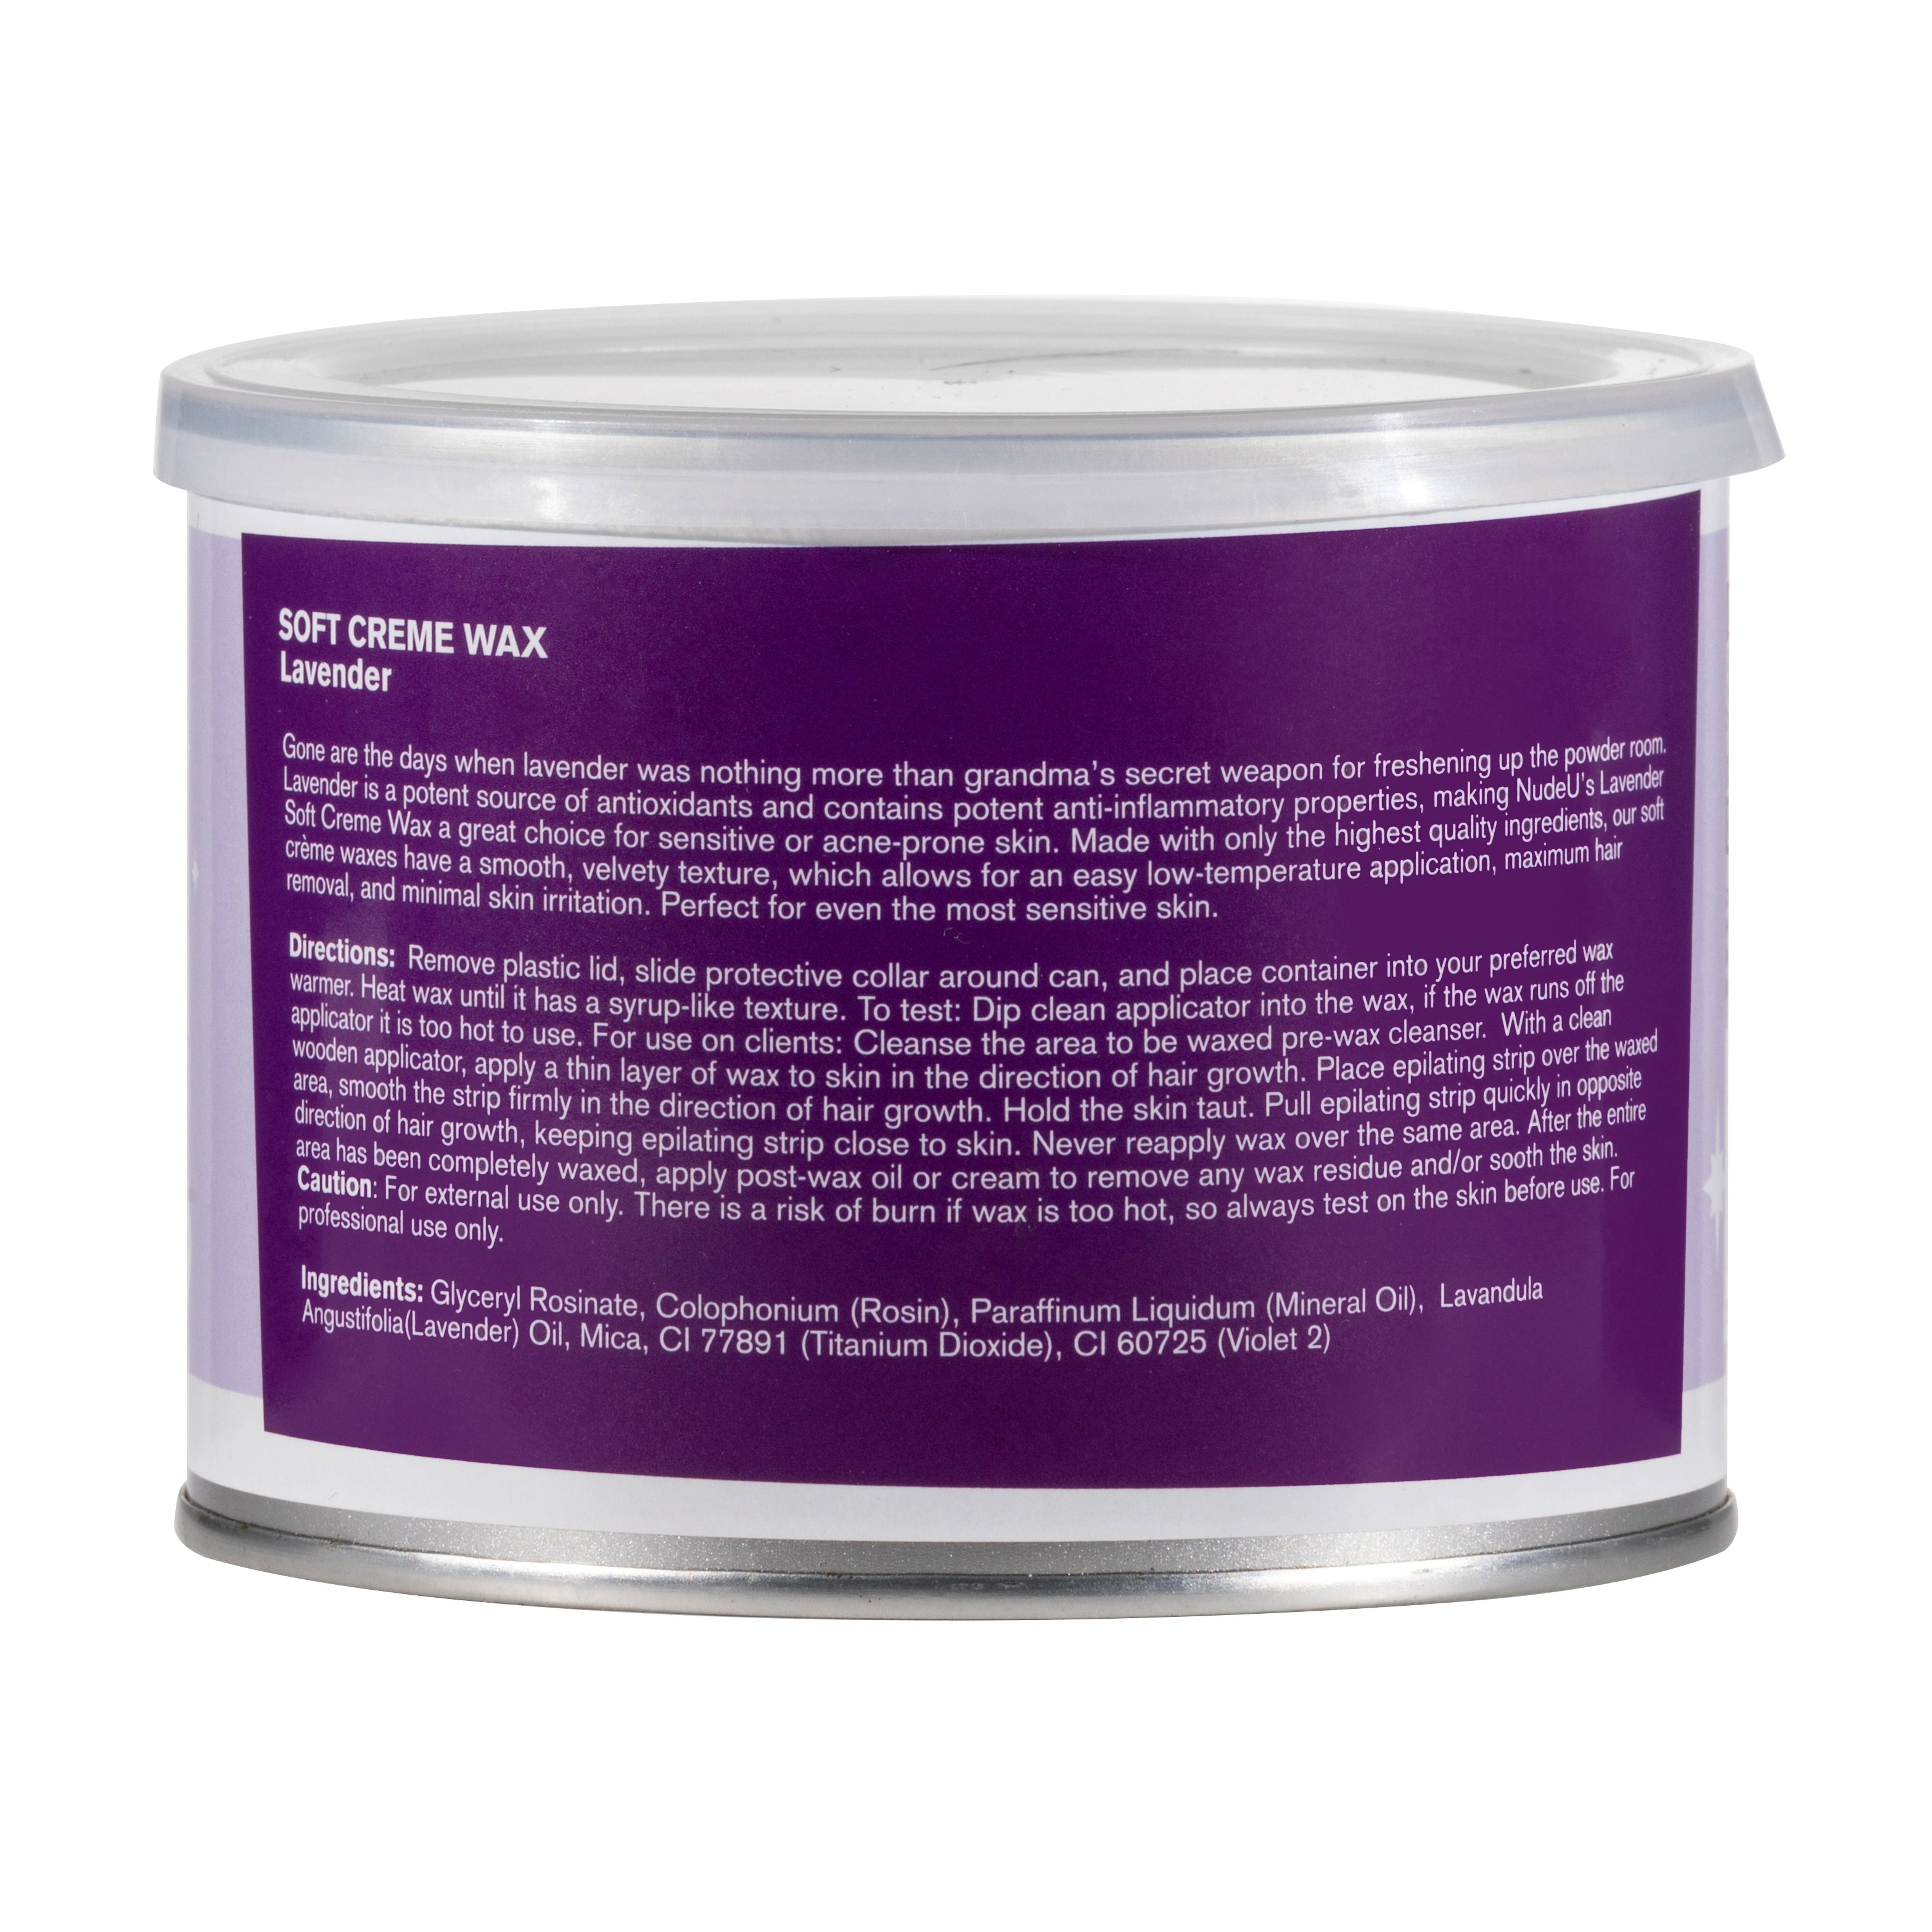 Lavender soft creme wax instructions